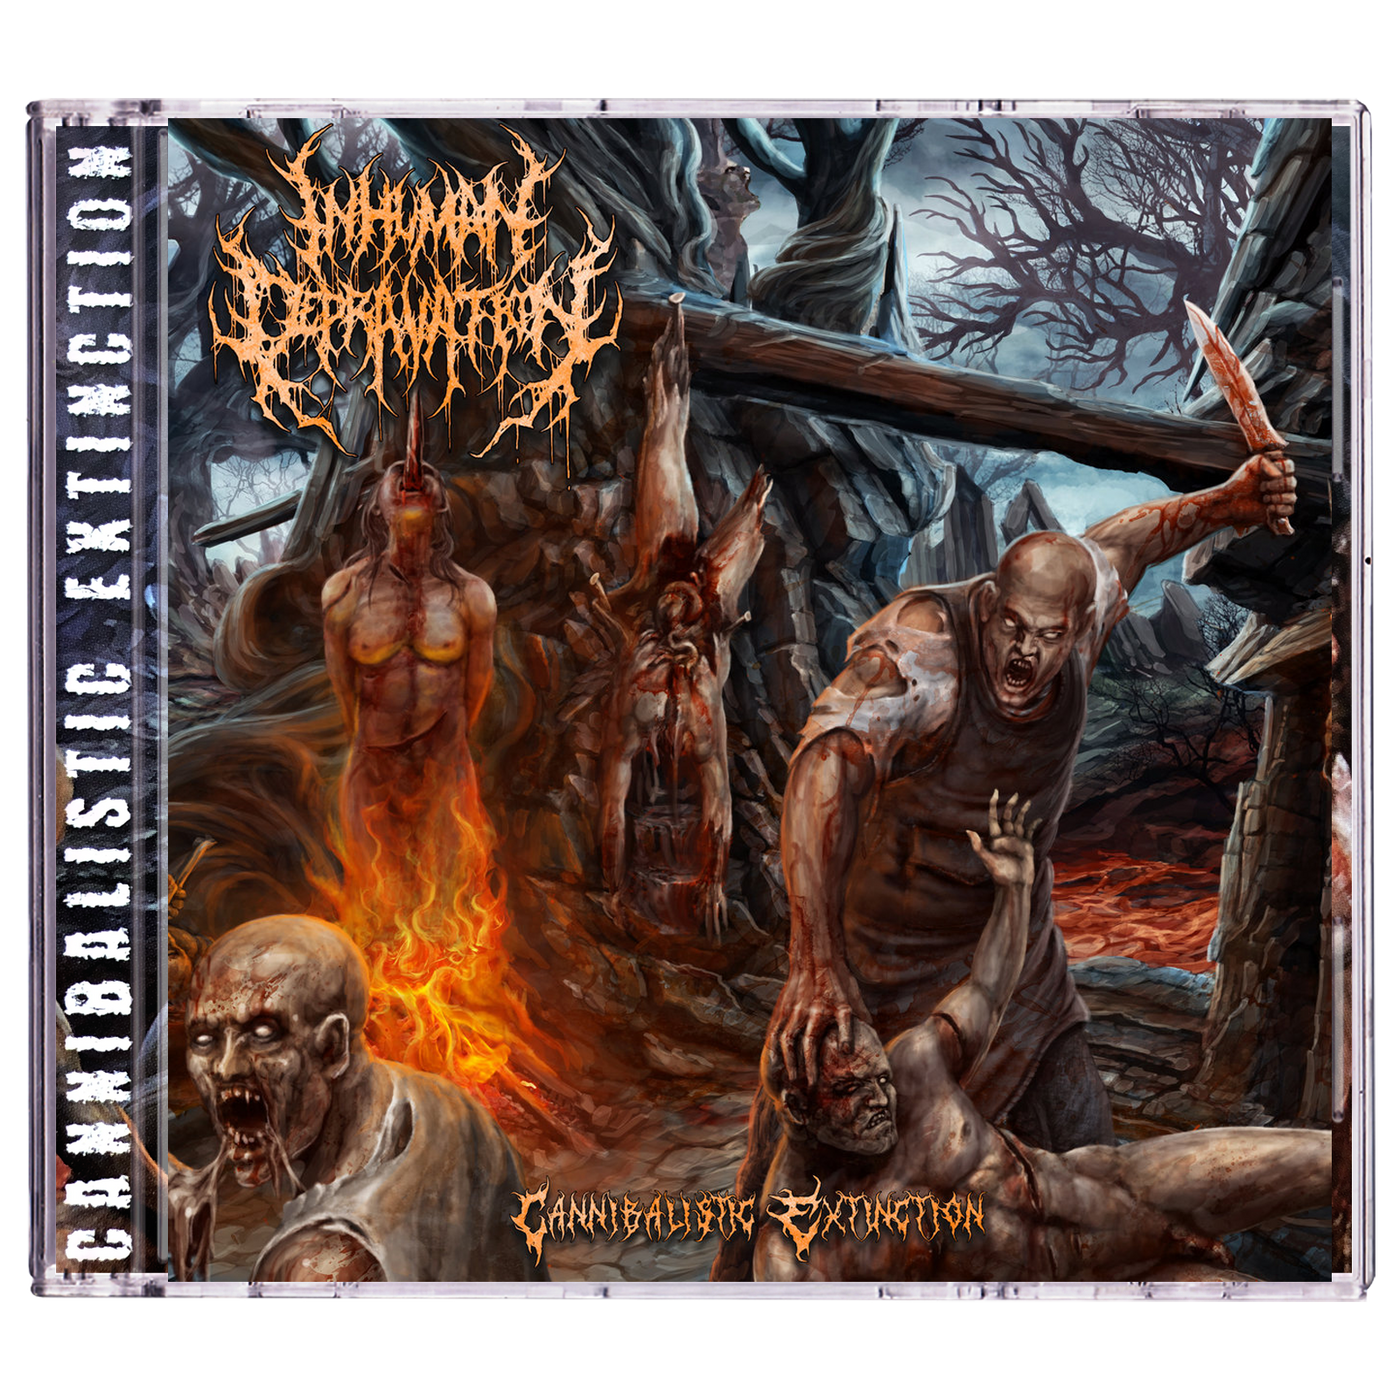 Inhuman Depravation 'Cannibalistic Extinction' CD